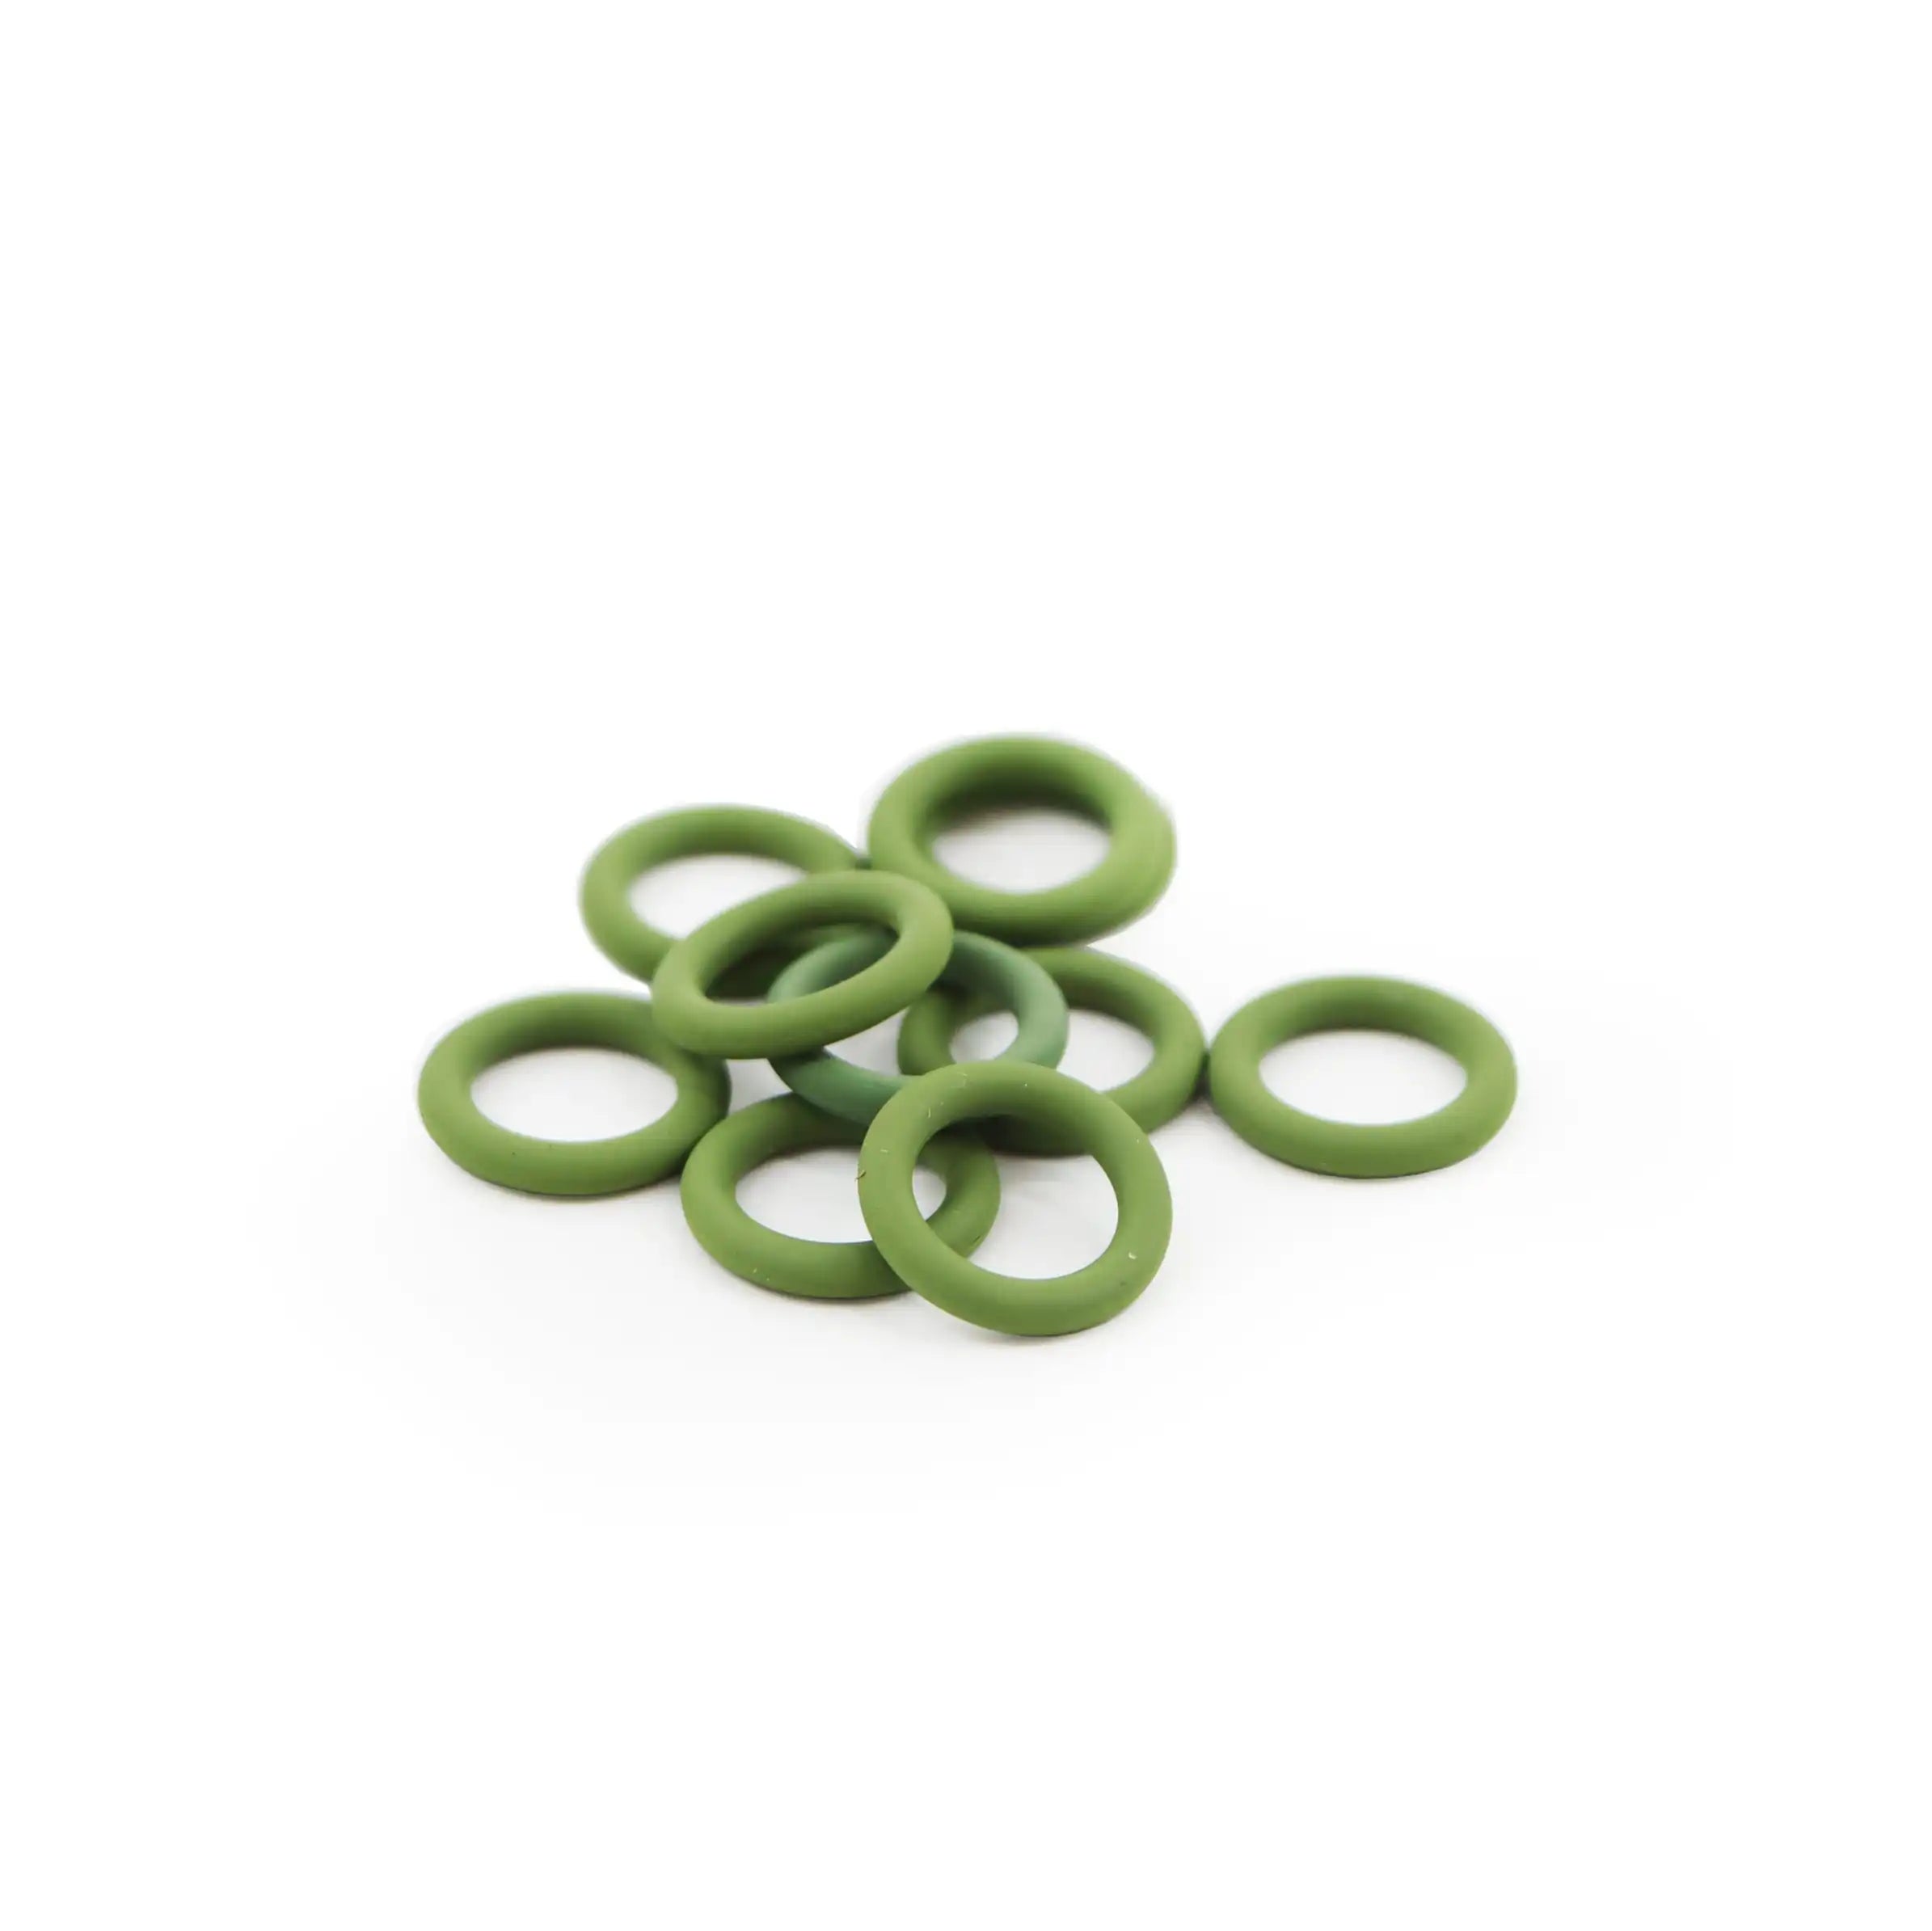 Kranzle Green Viton O-Rings (10pack)